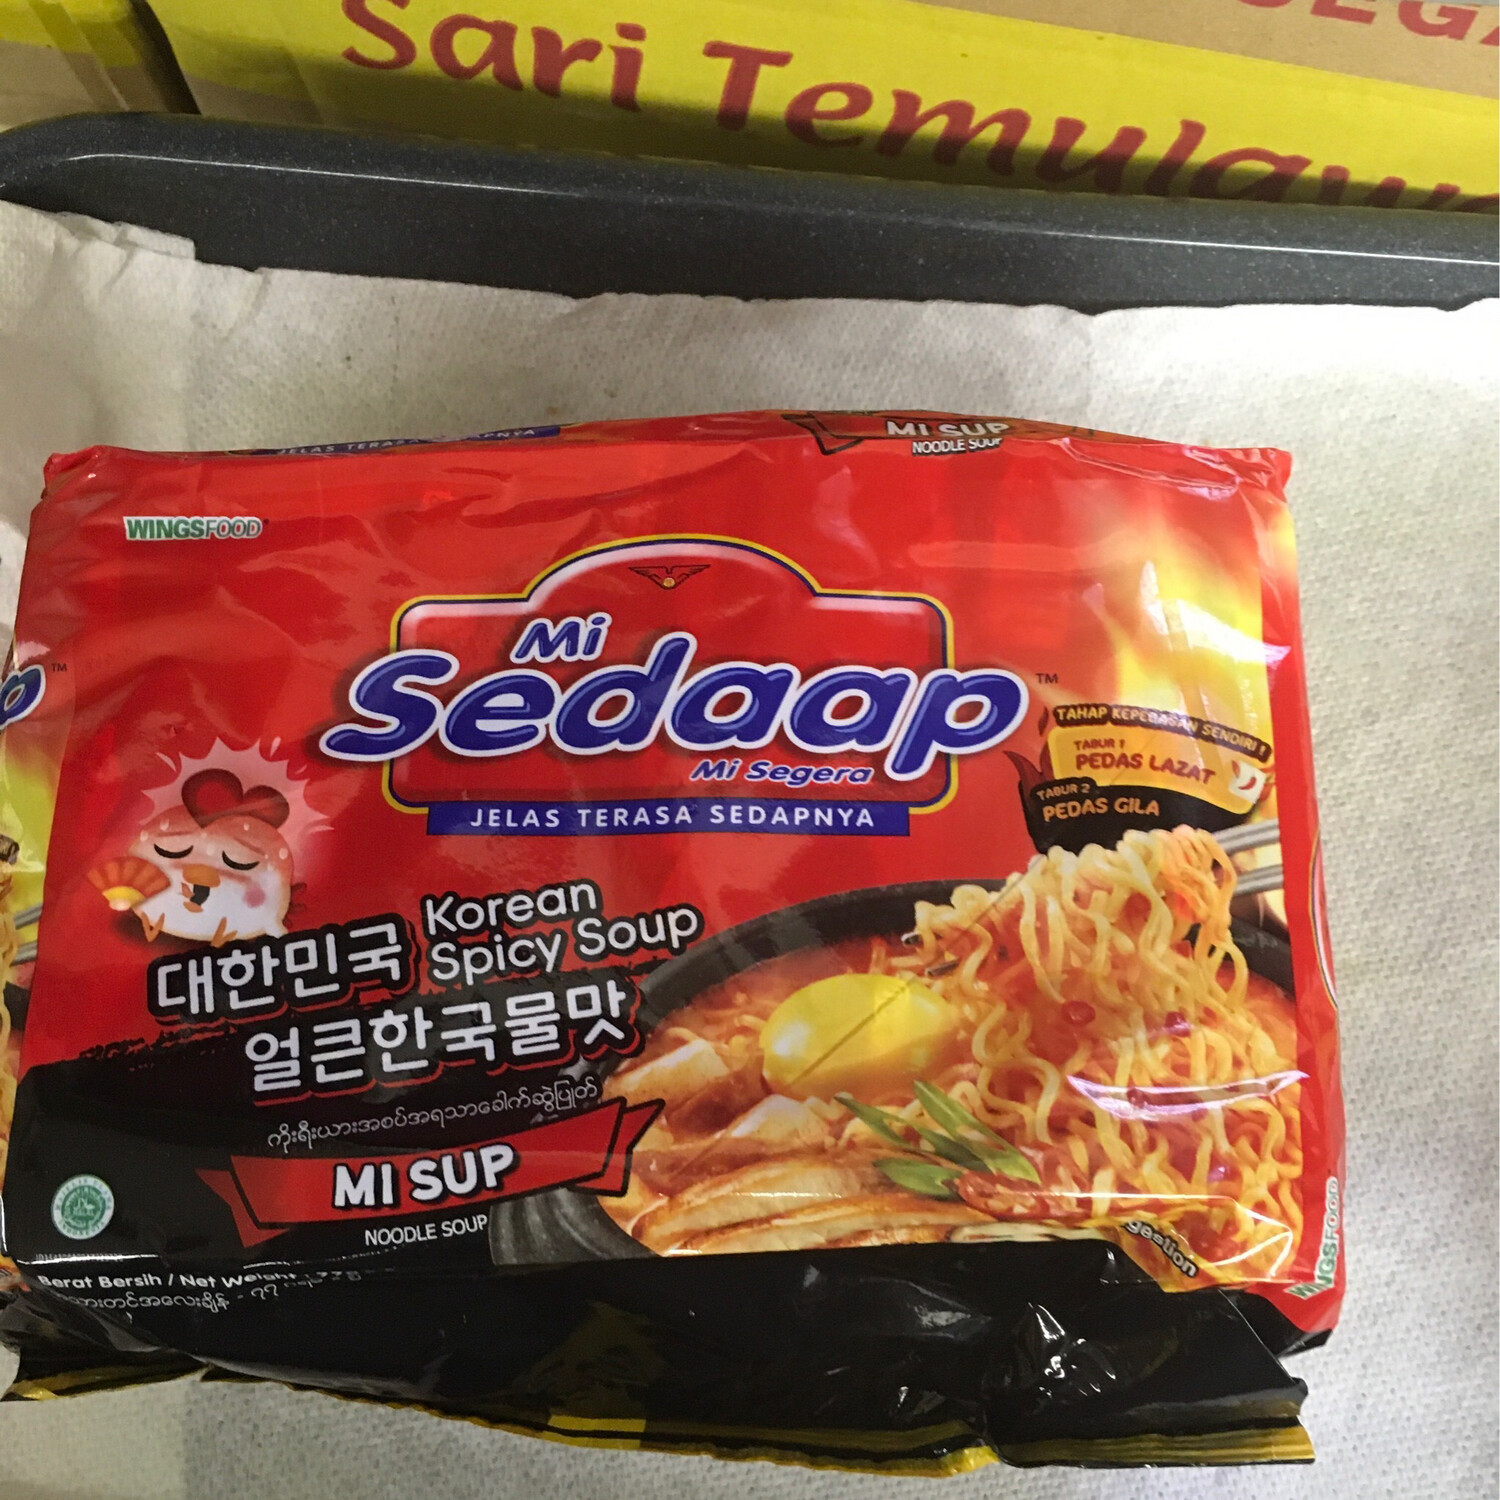 Mie Sedaap Korean Spicy Soup Isi 5 PCs